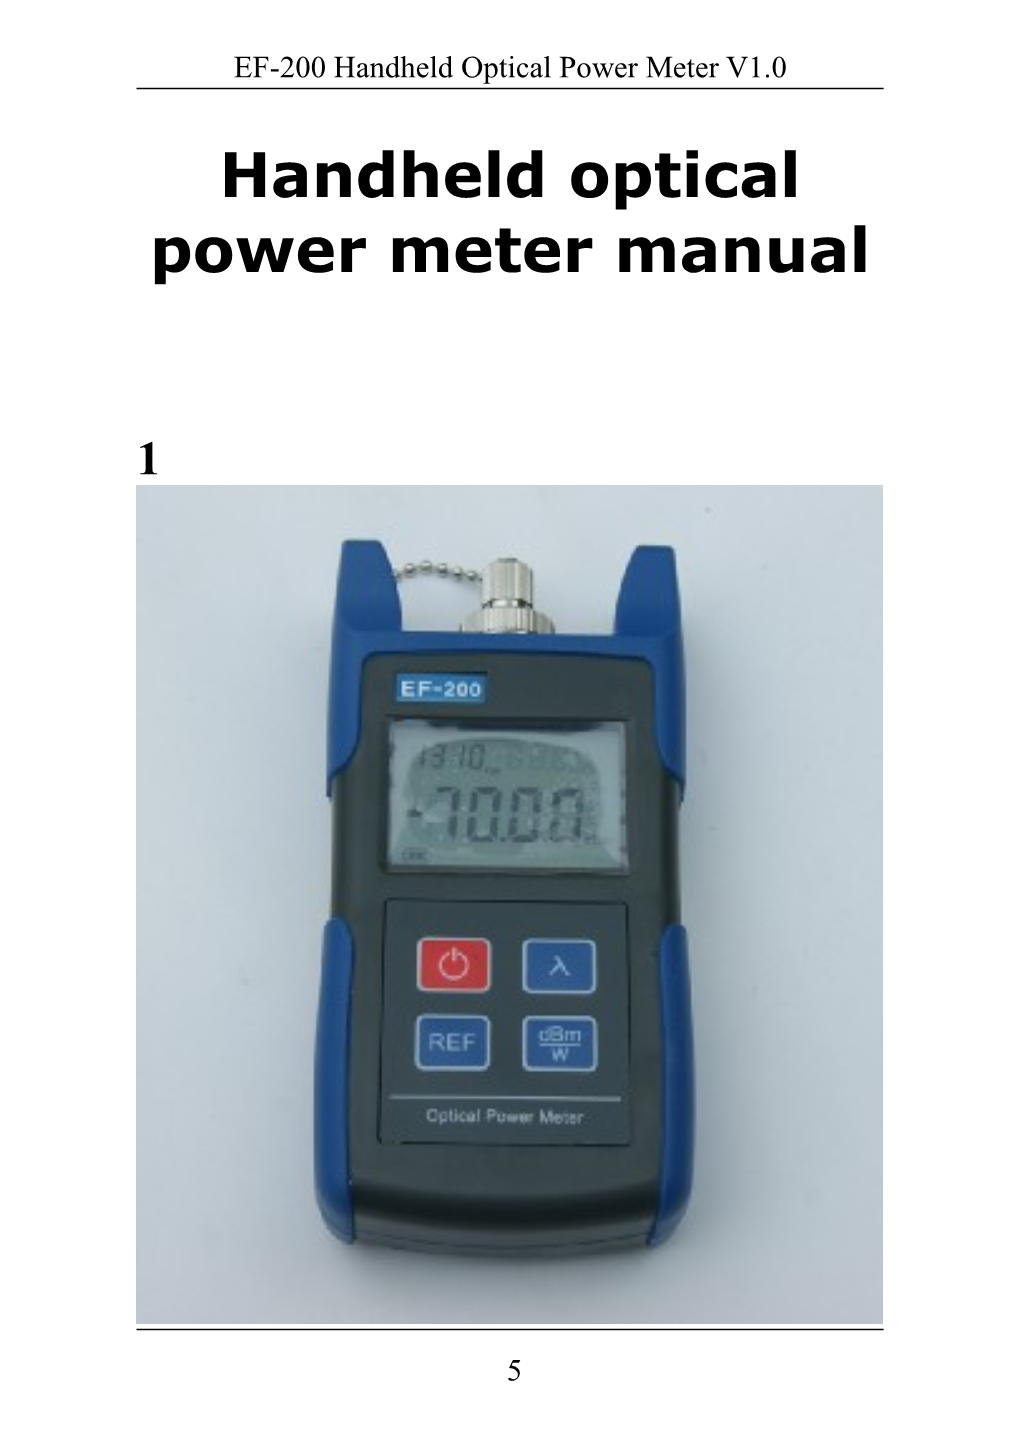 EF-200 Handheld Optical Power Meter V1.0